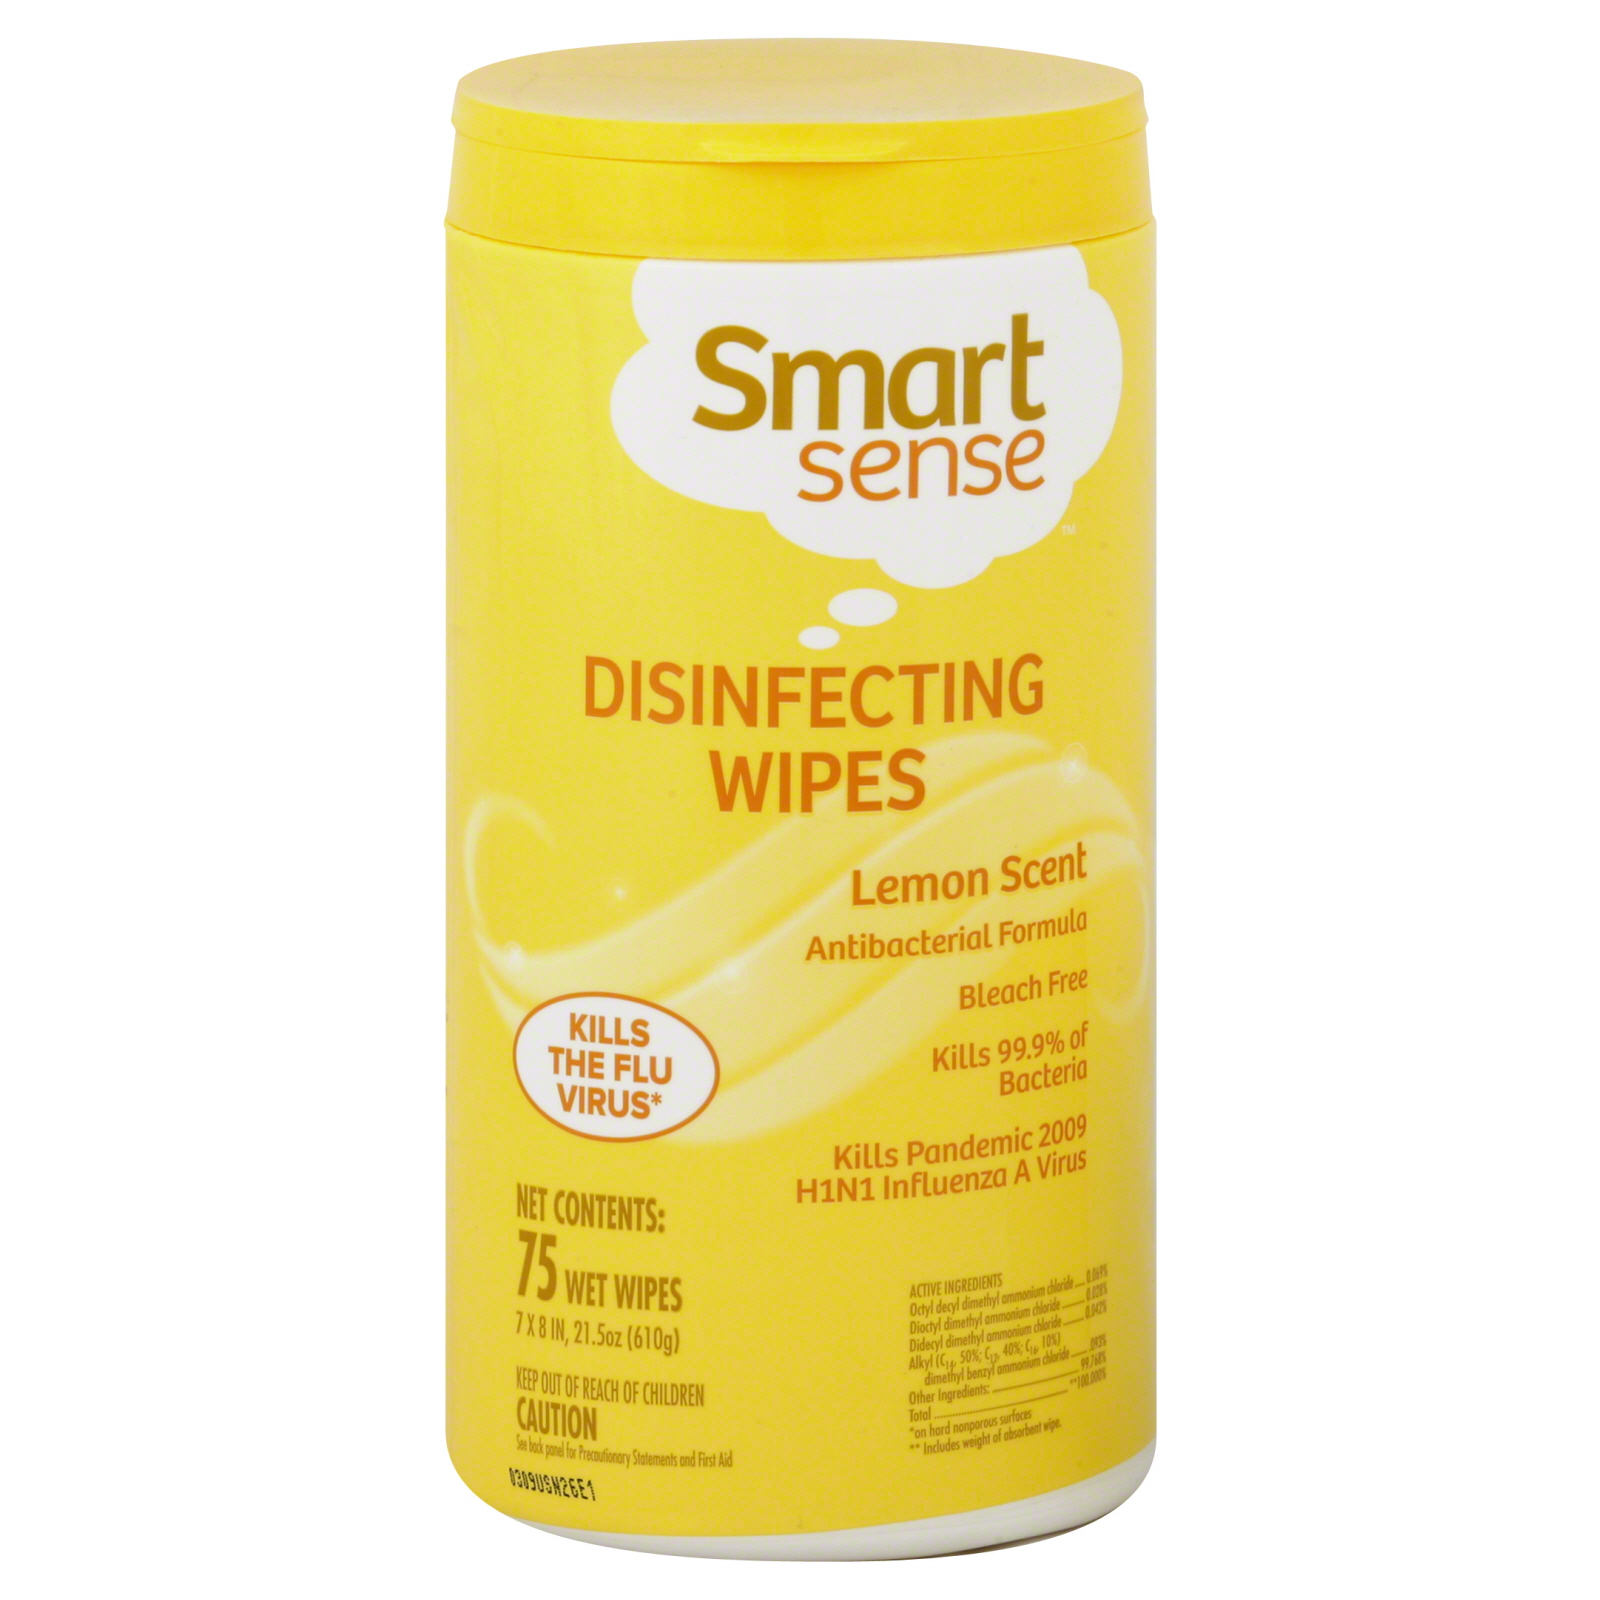 Smart Sense Disinfecting Wipes, Lemon Scent 75 wipes [21.5 oz (610 g)]